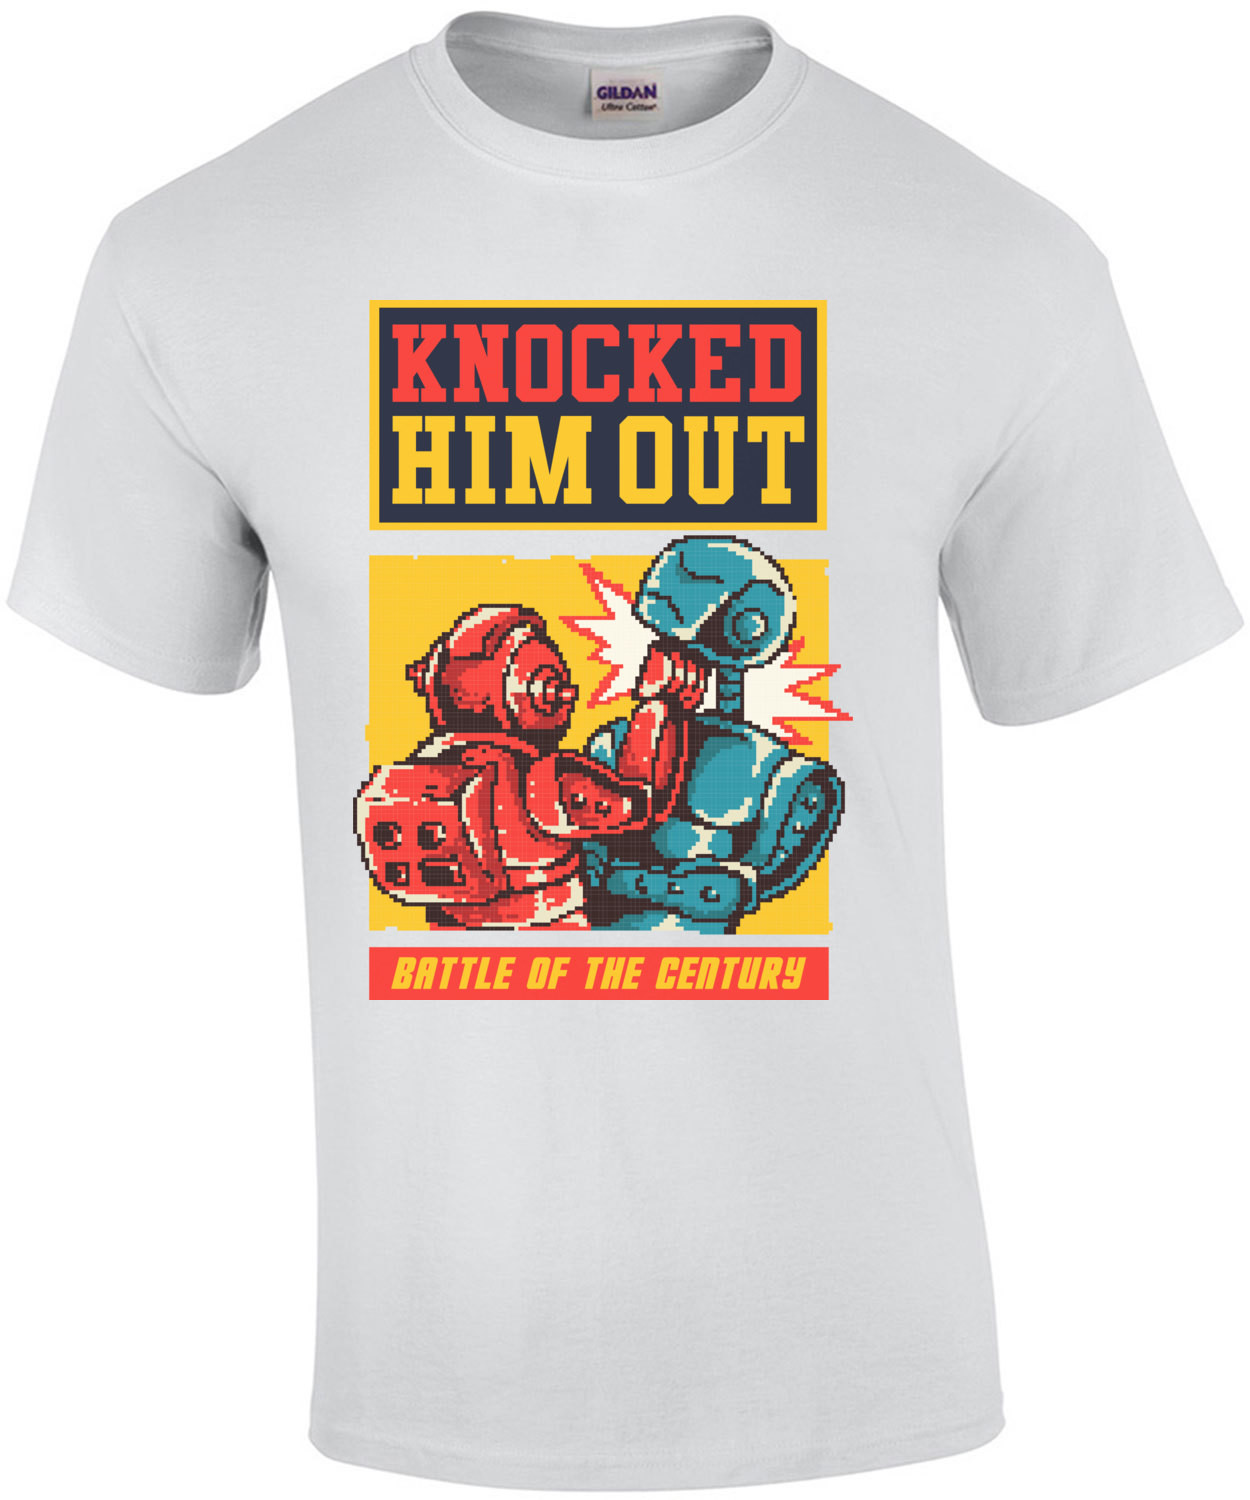 Rock Em Sock Em Knocked Him Out Retro T-Shirt